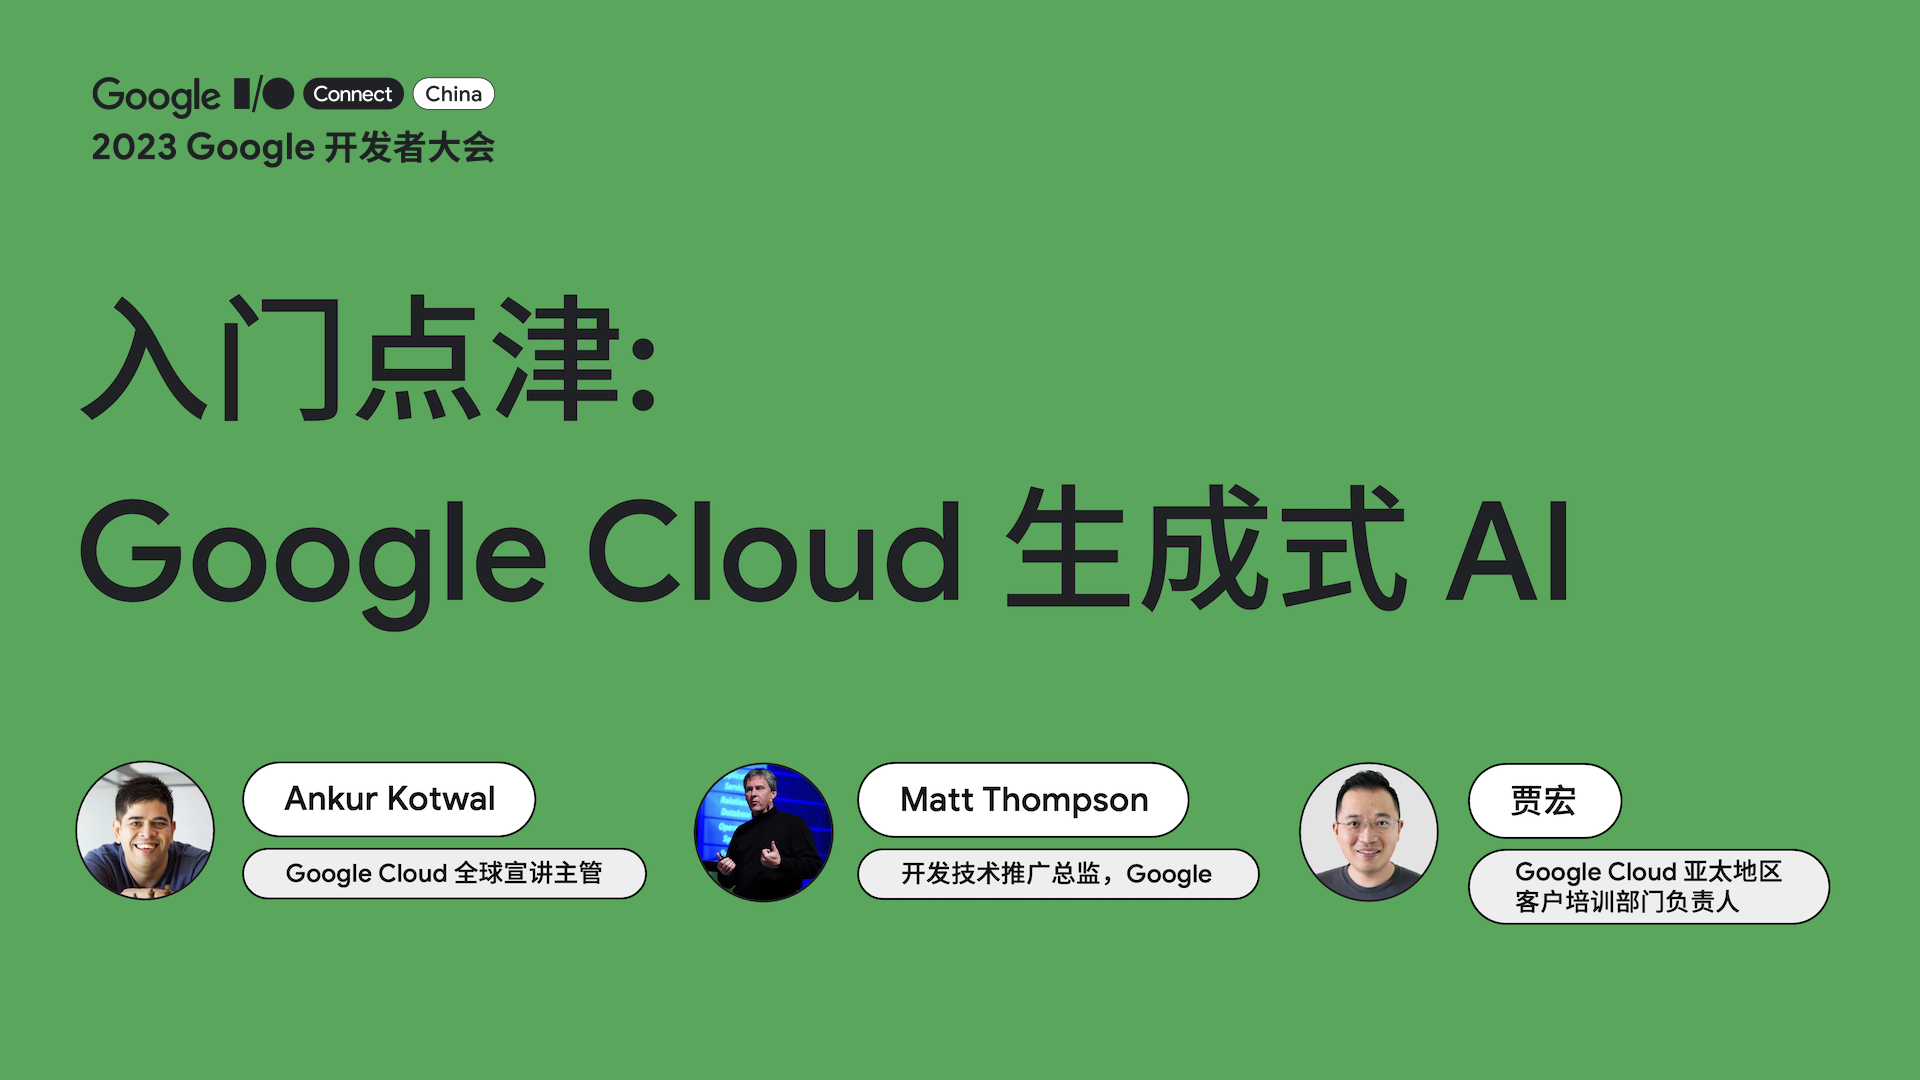  Entry point: Google Cloud generative AI